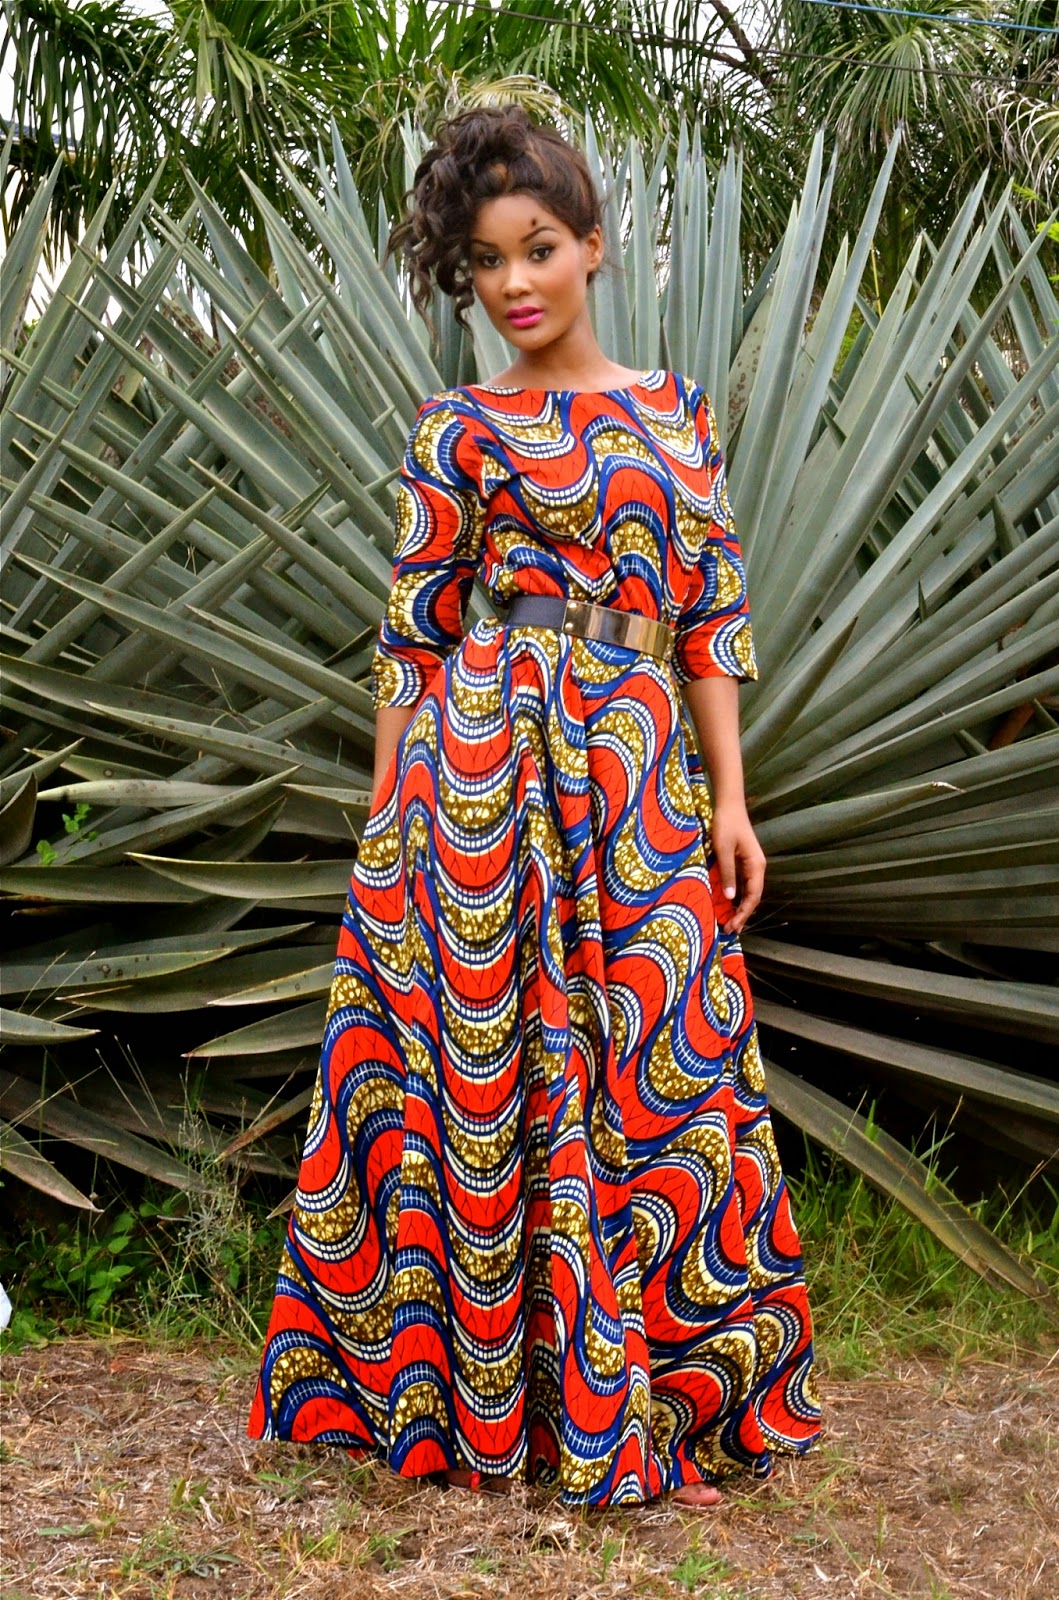 Kikis Fashion African Print Maxi Dress Available At Kikis Fashion Boutique 